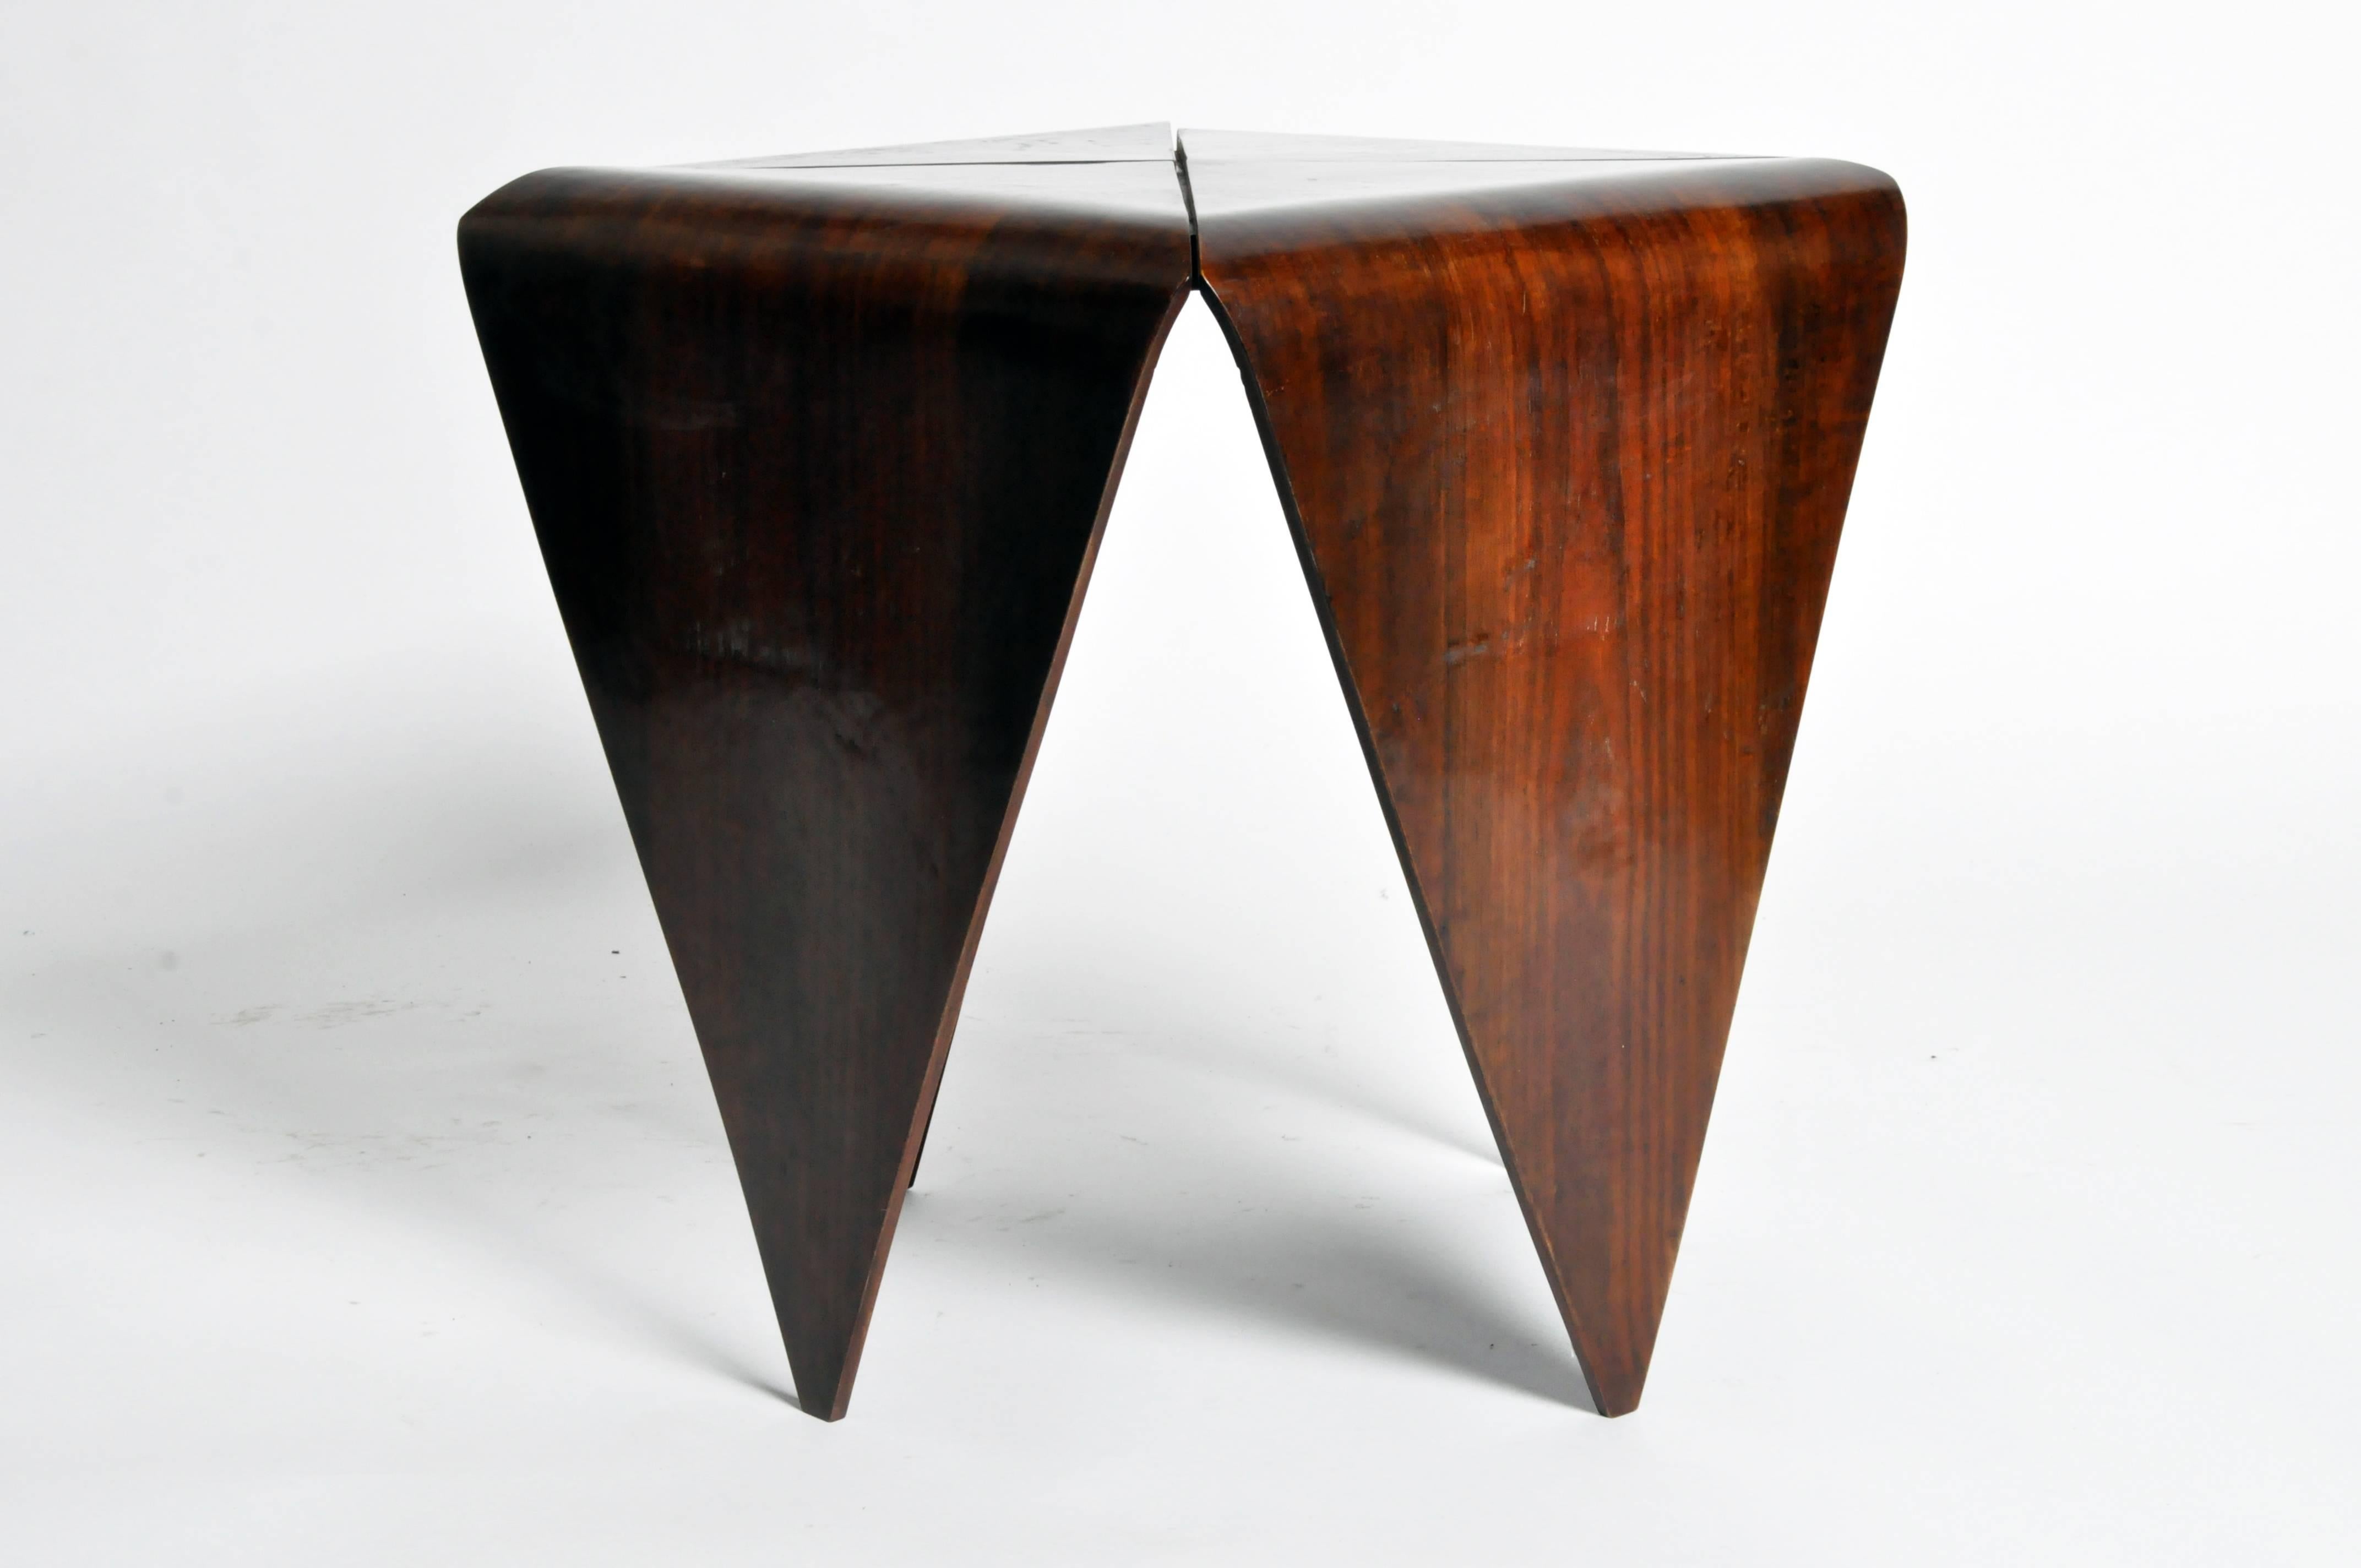 Wood Table by Jorge Zalszupin